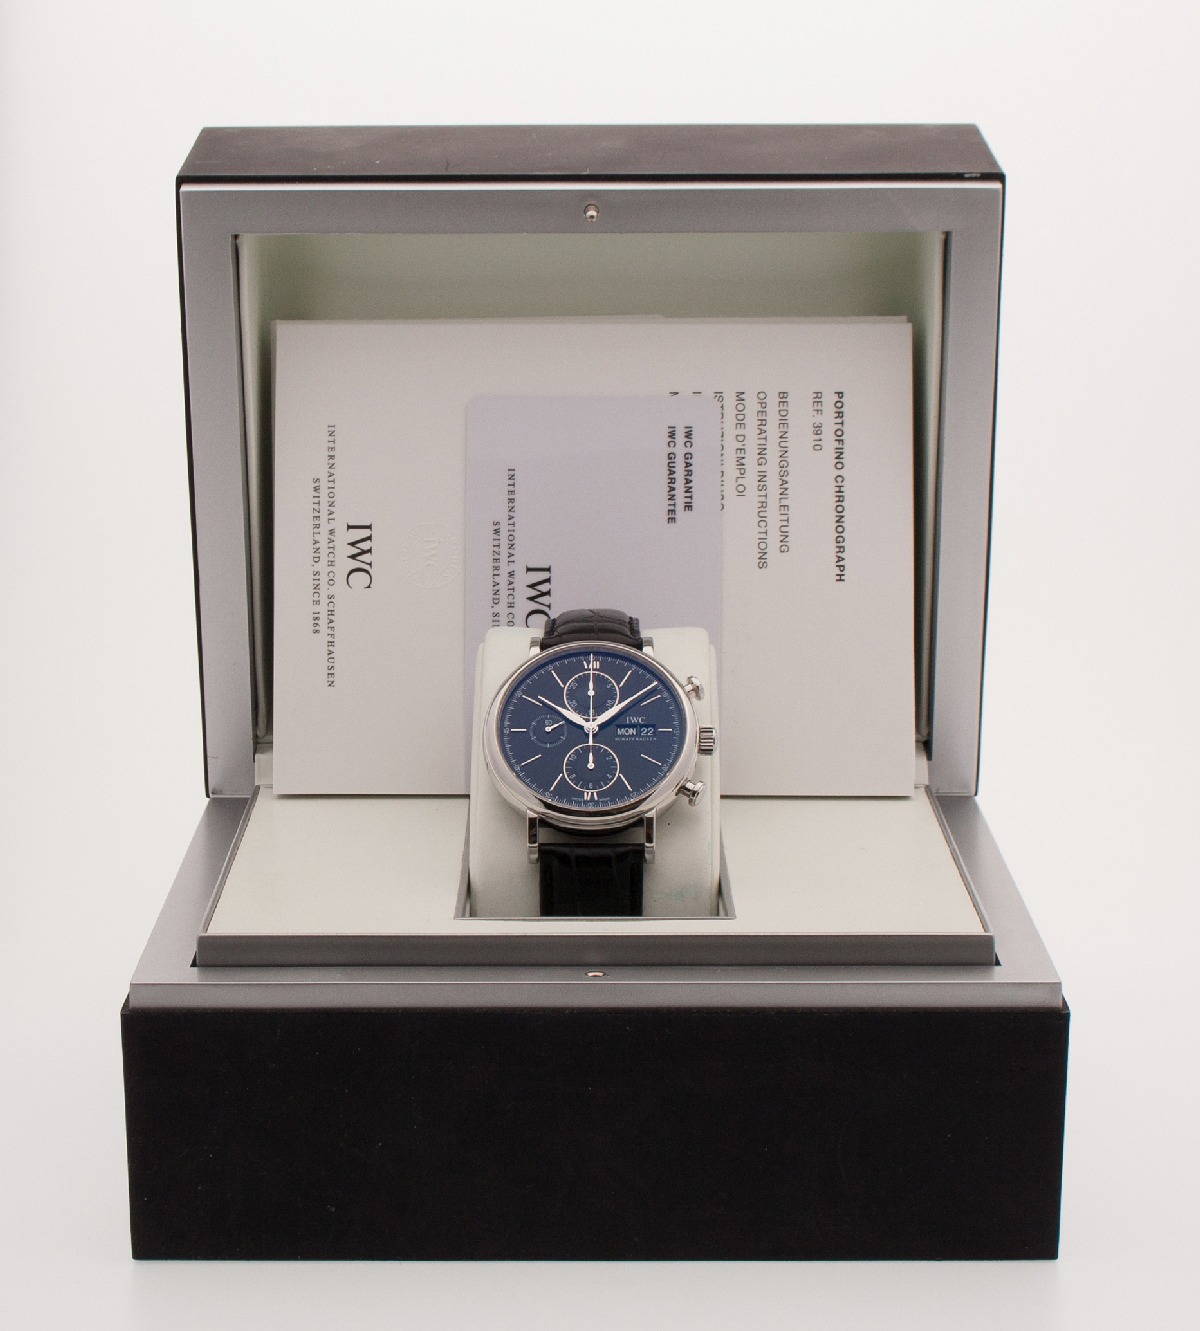 IWC Portofino Chronograph Day-Date 42MM watch, silver